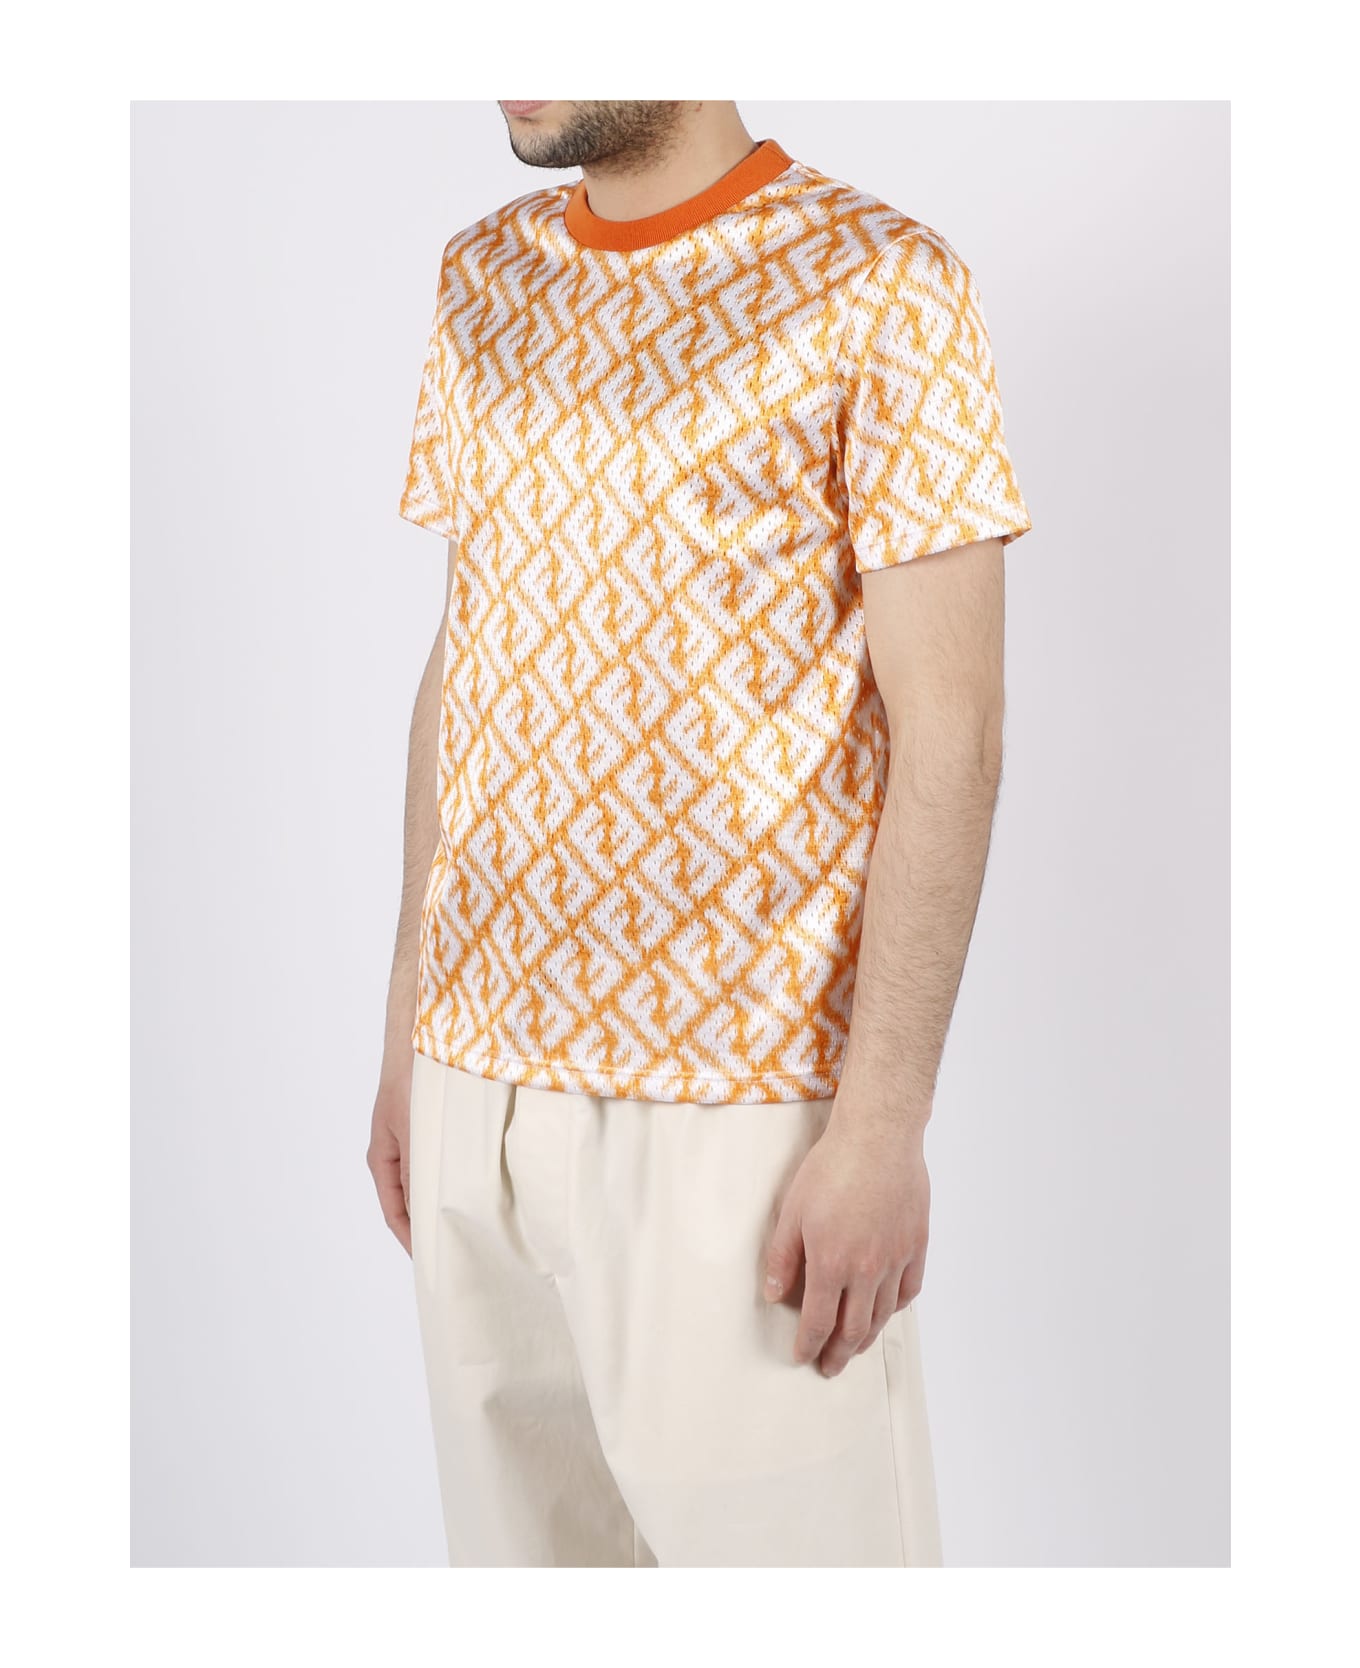 Fendi Mesh Ff T-shirt - Yellow & Orange